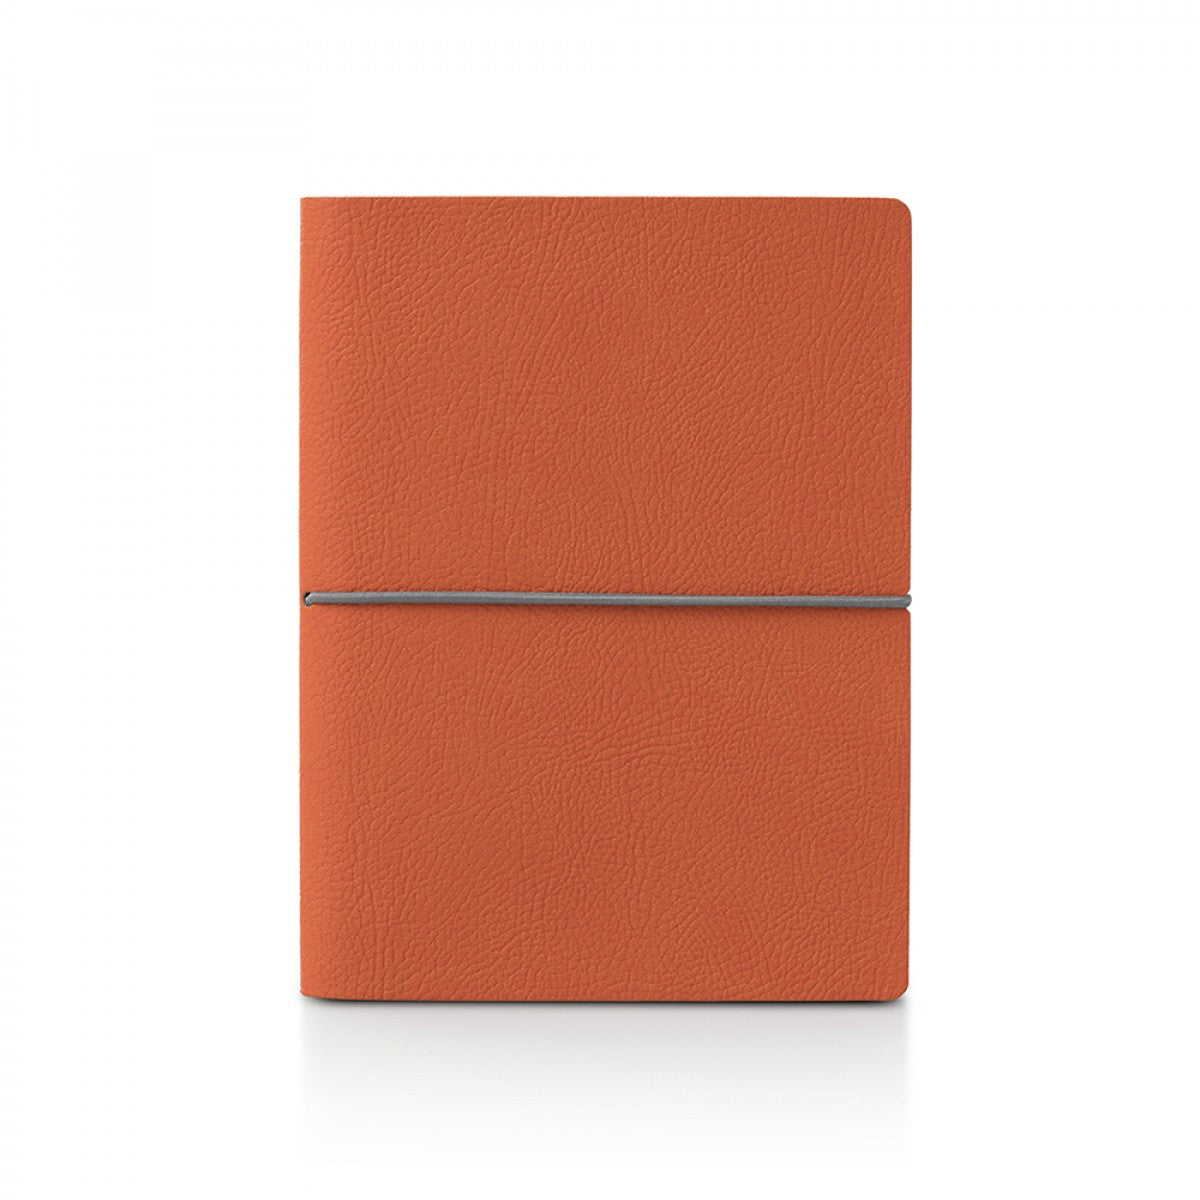 Ciak Smartbook Note Book Orange 6" by 8"